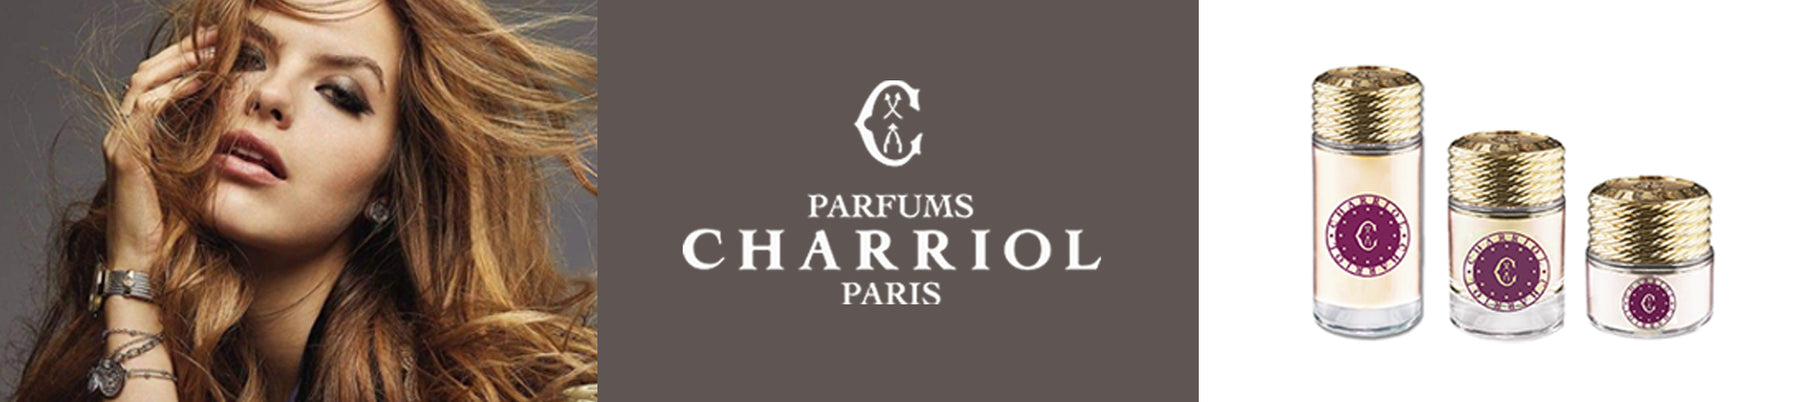 Parfums Charriol